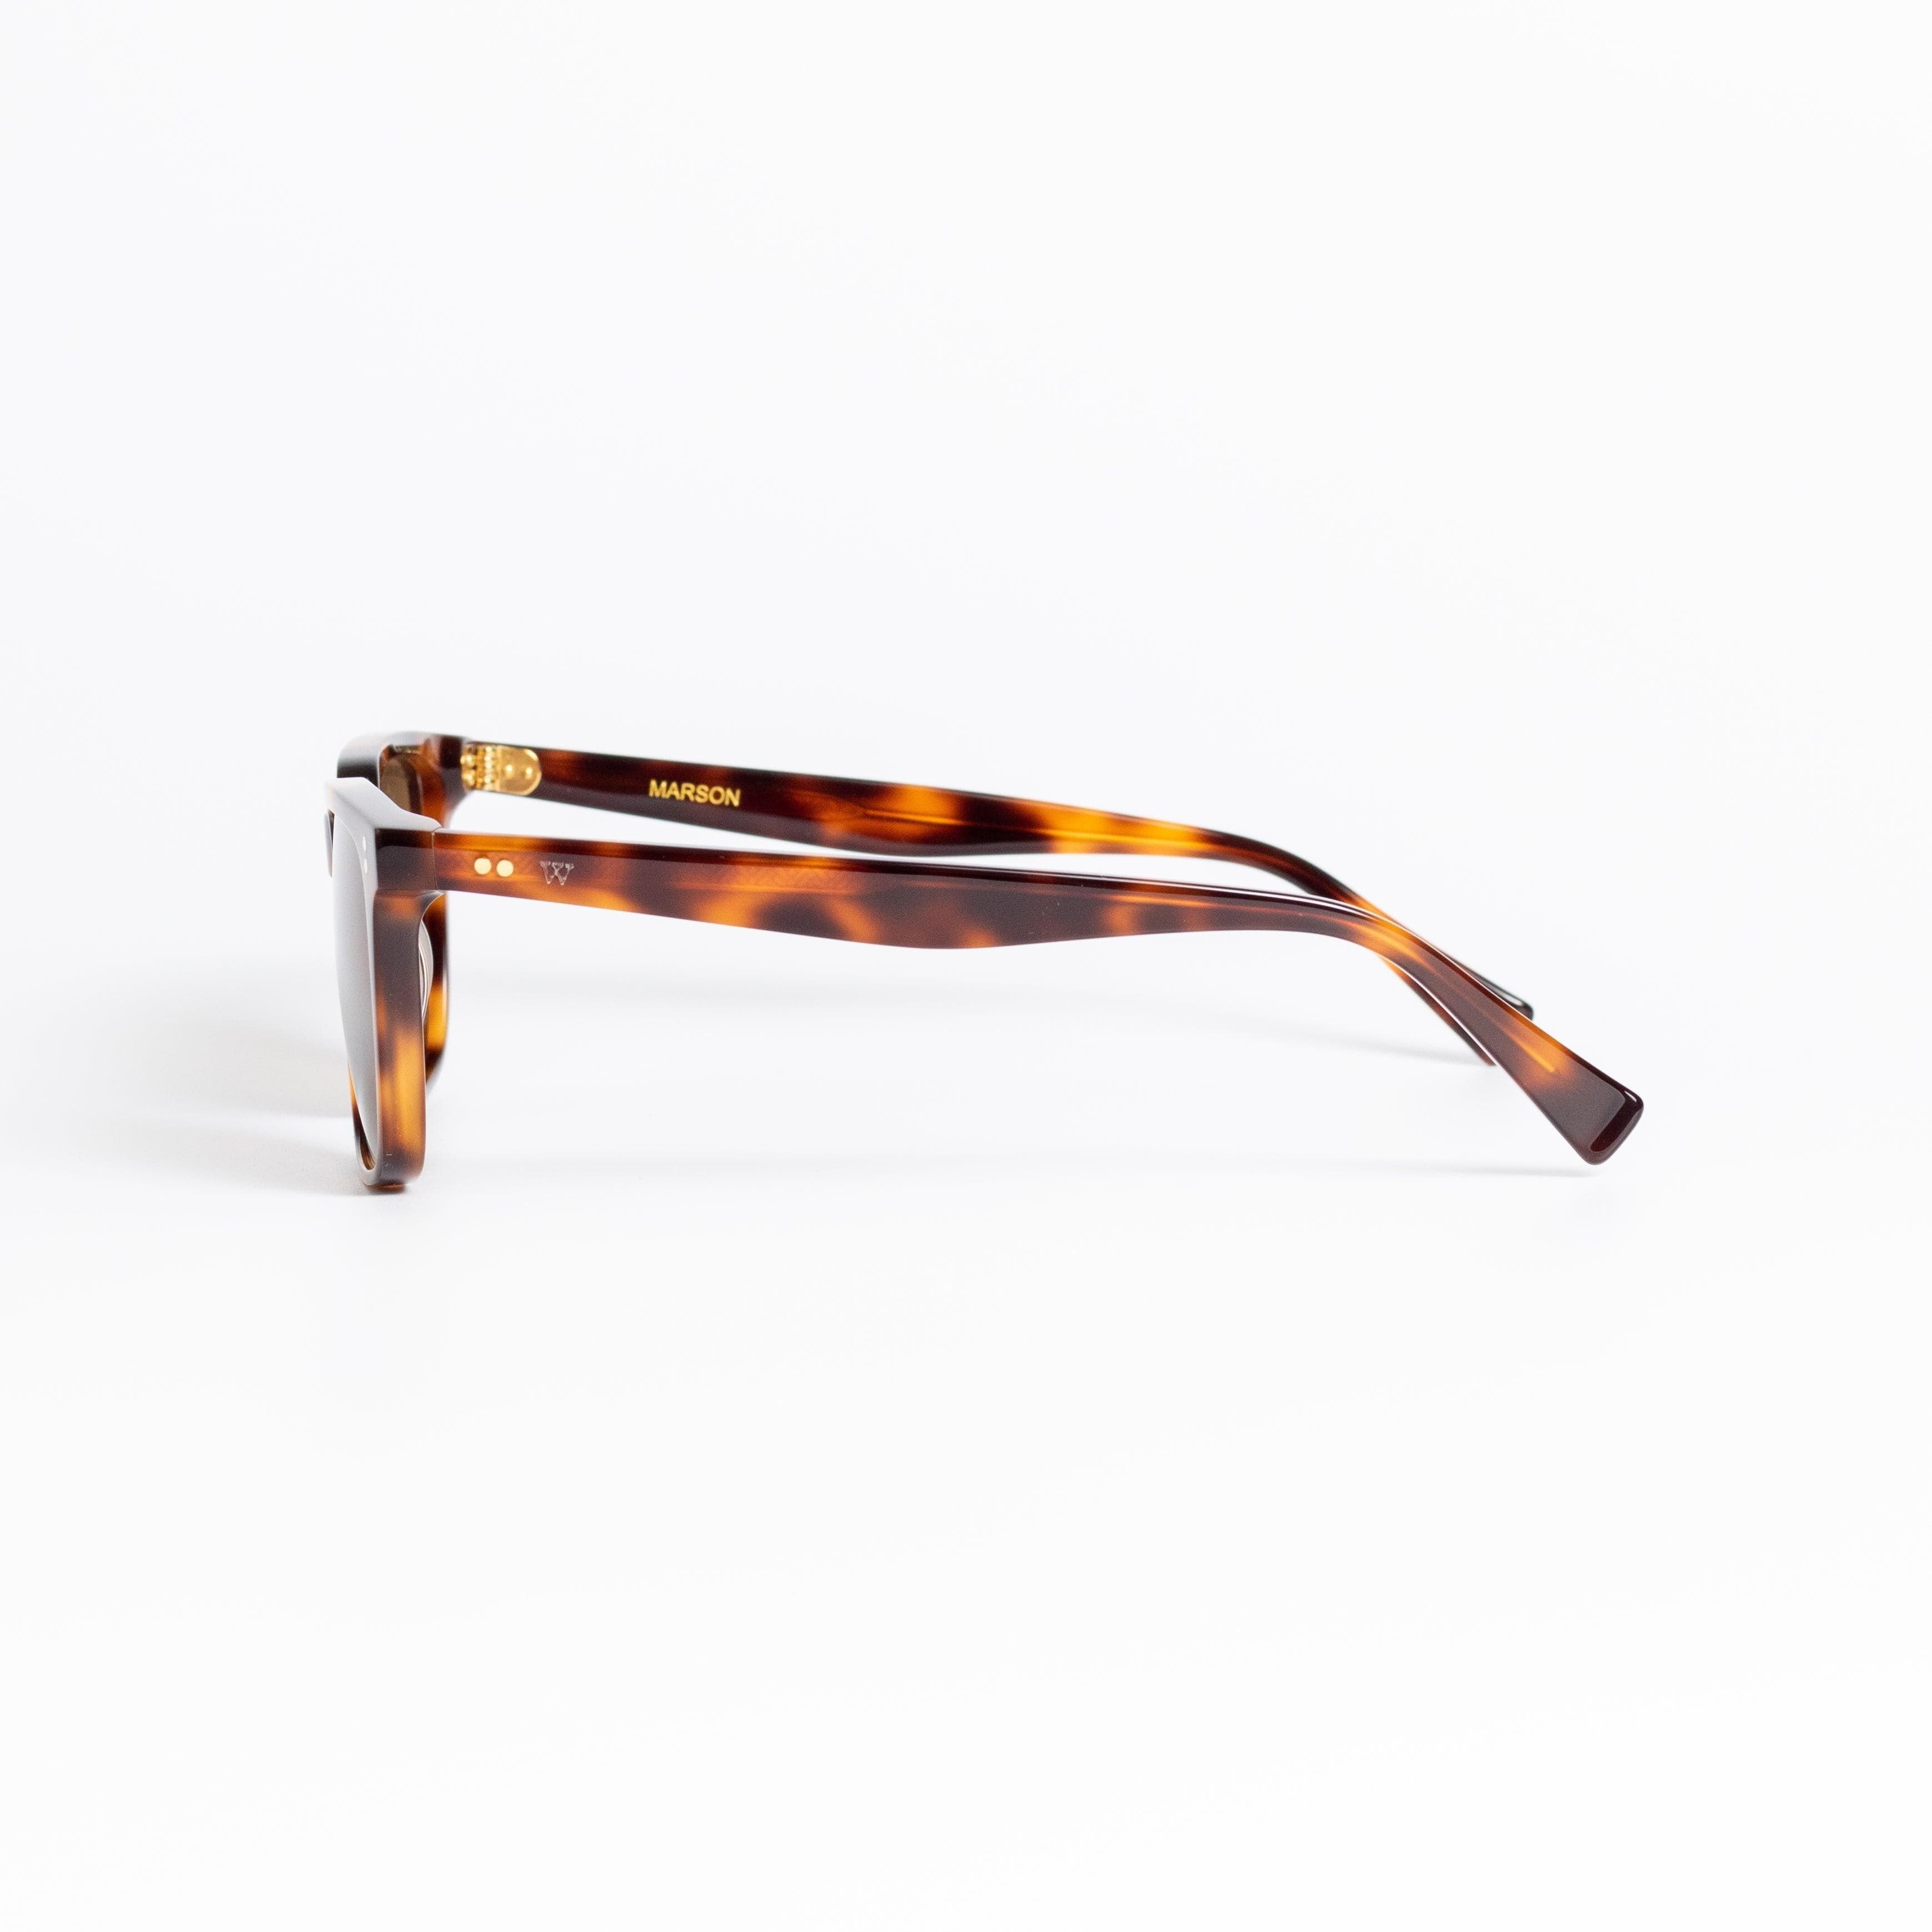 Walter Hill Sunglasses Tortoise / Standard / Polarized Cat.3 MARSON - Tortoise